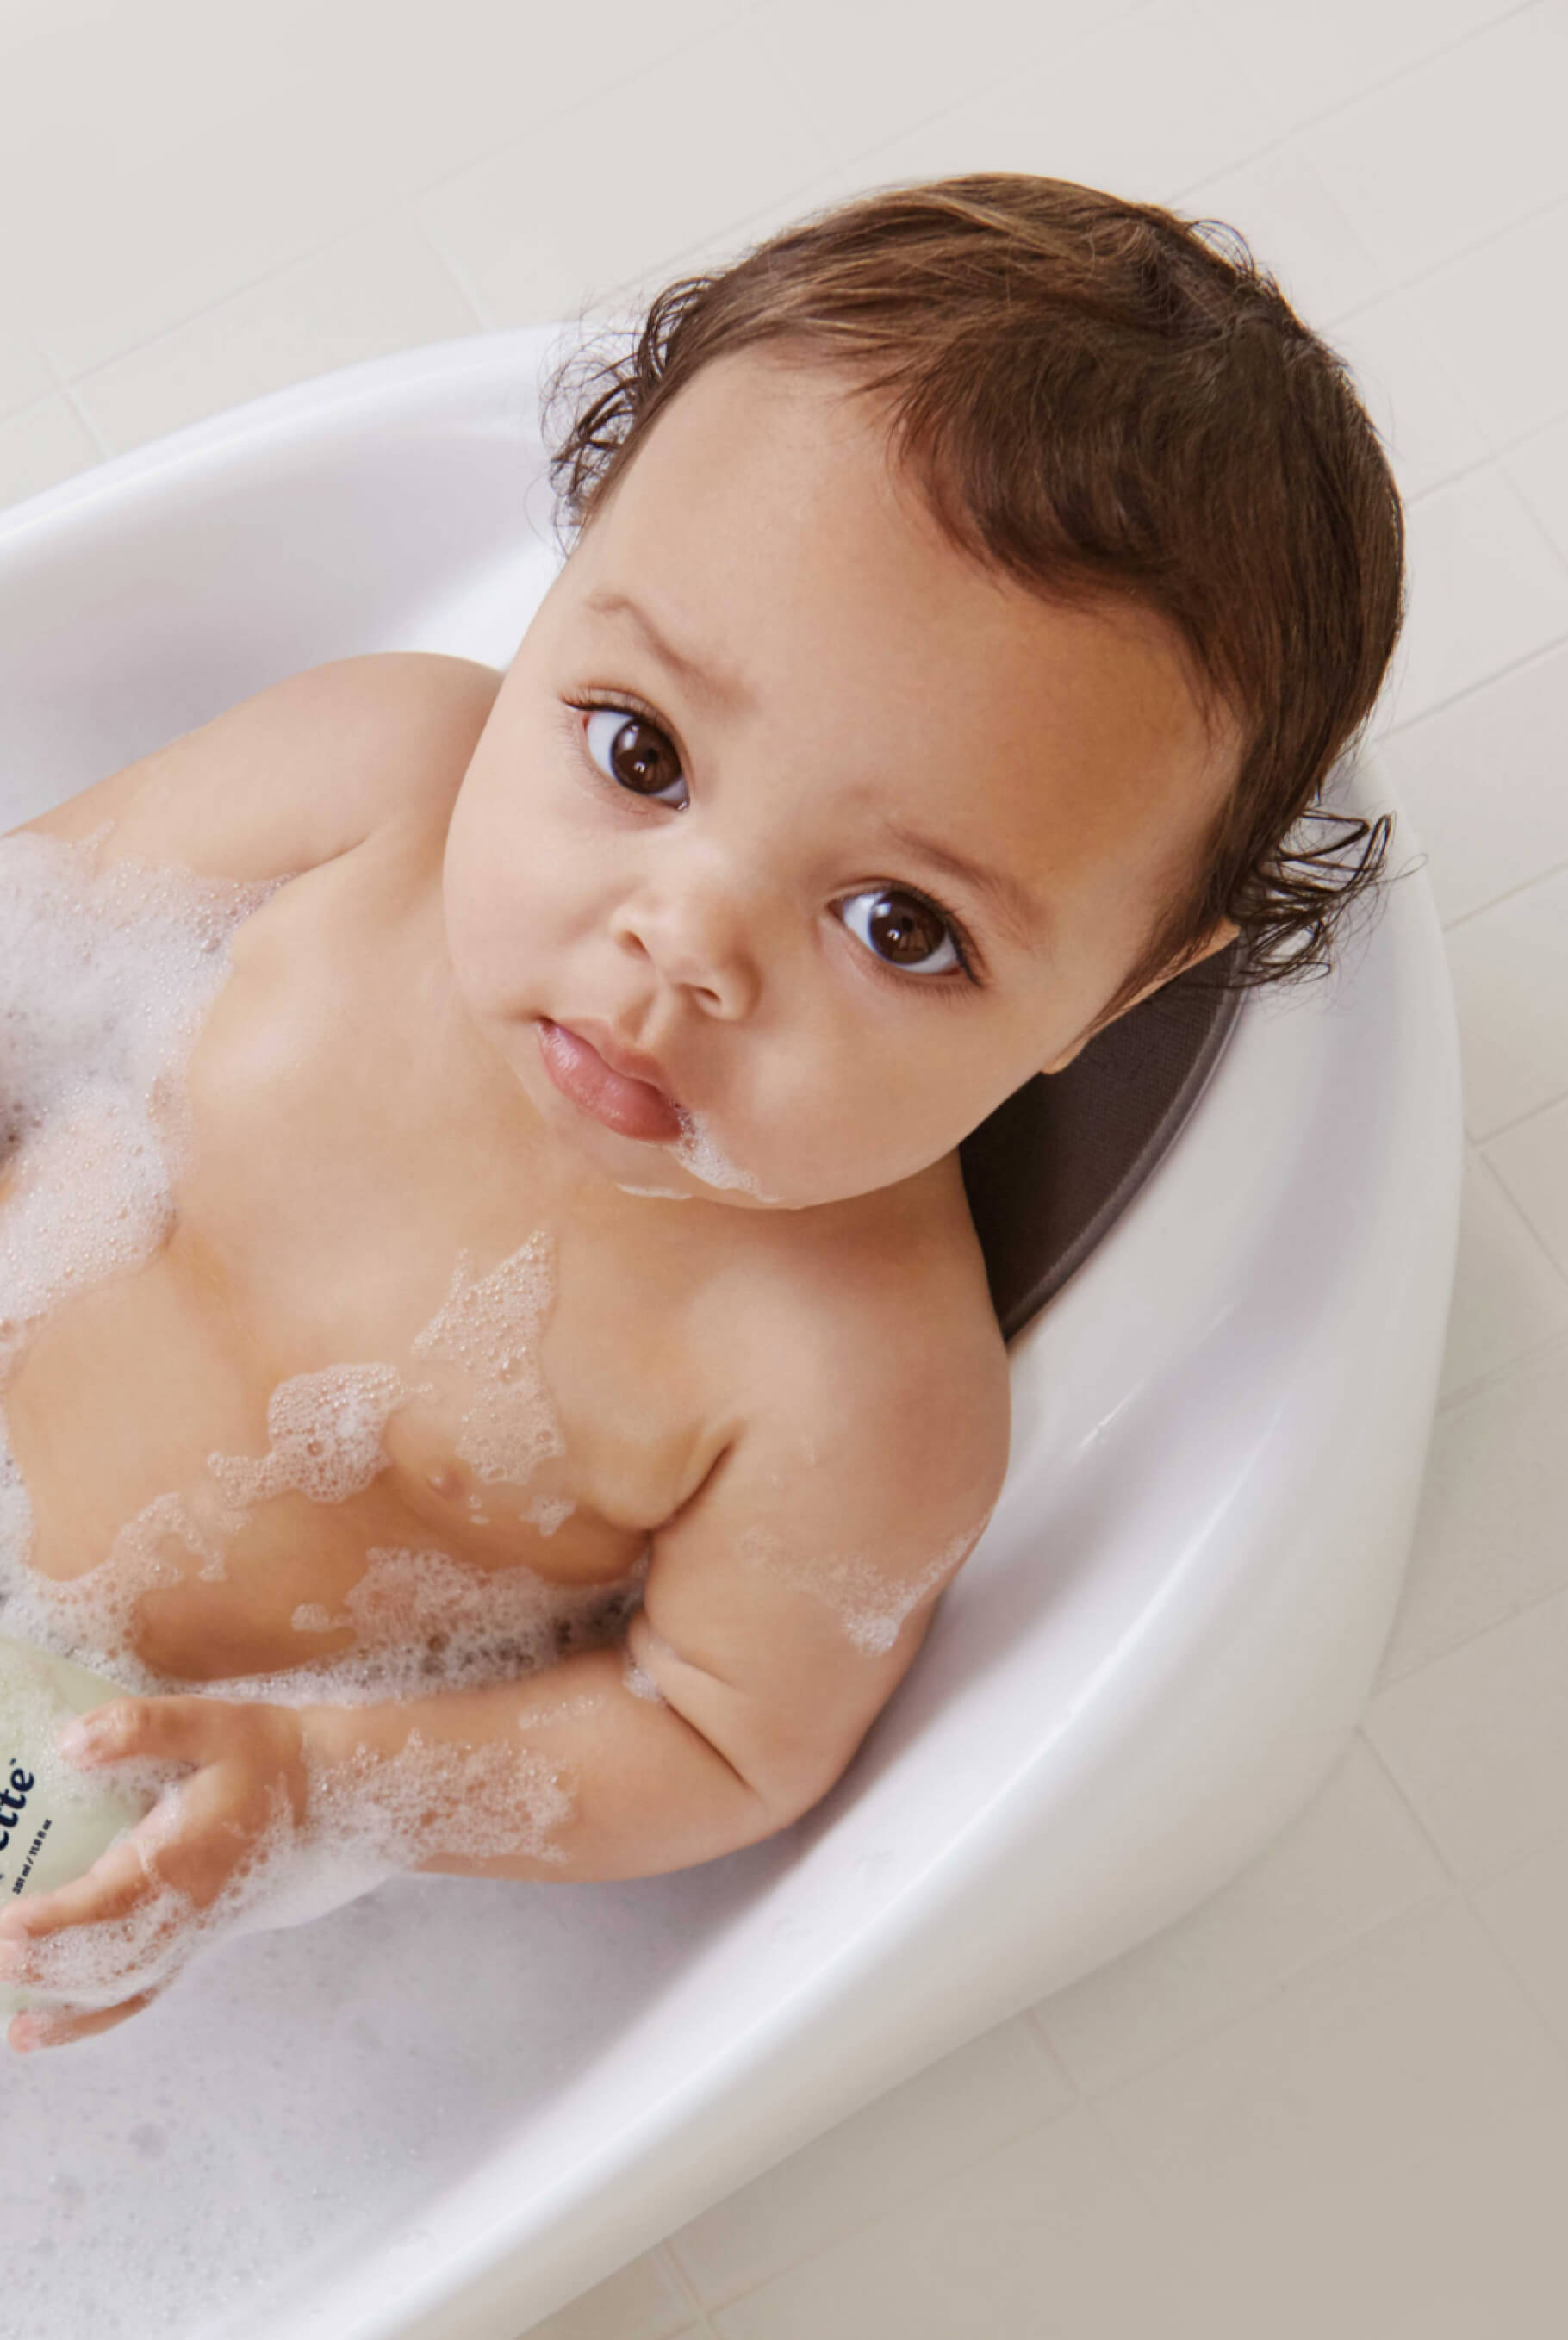 Baby in tub holding Baby Shampoo + Wash